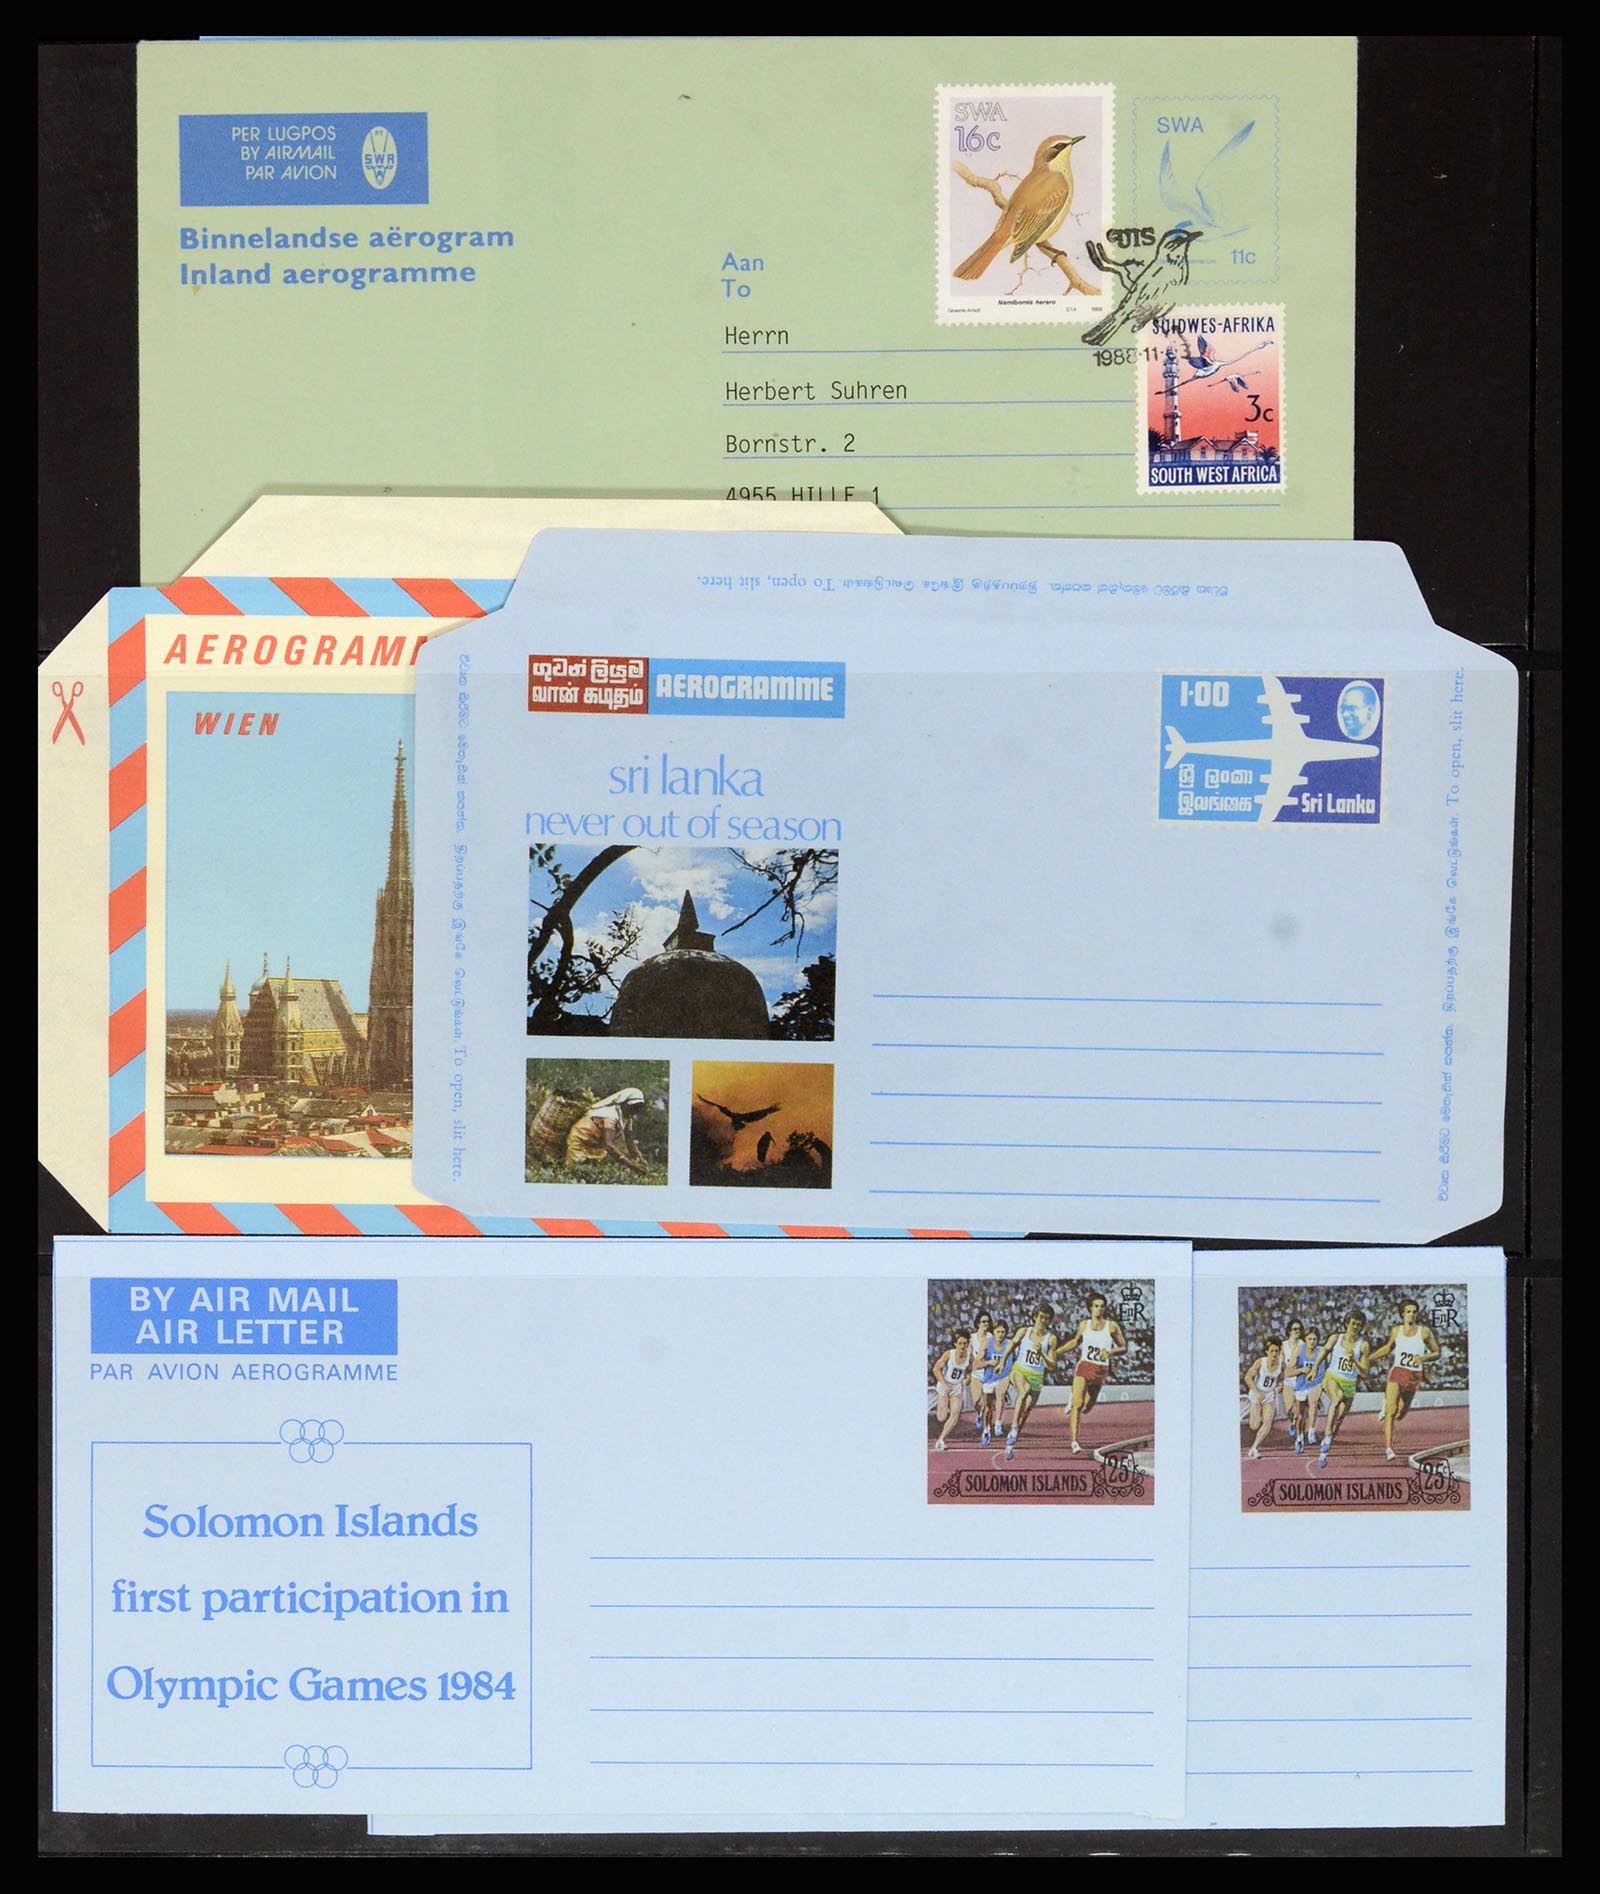 36627 024 - Stamp collection 36627 World aerograms.